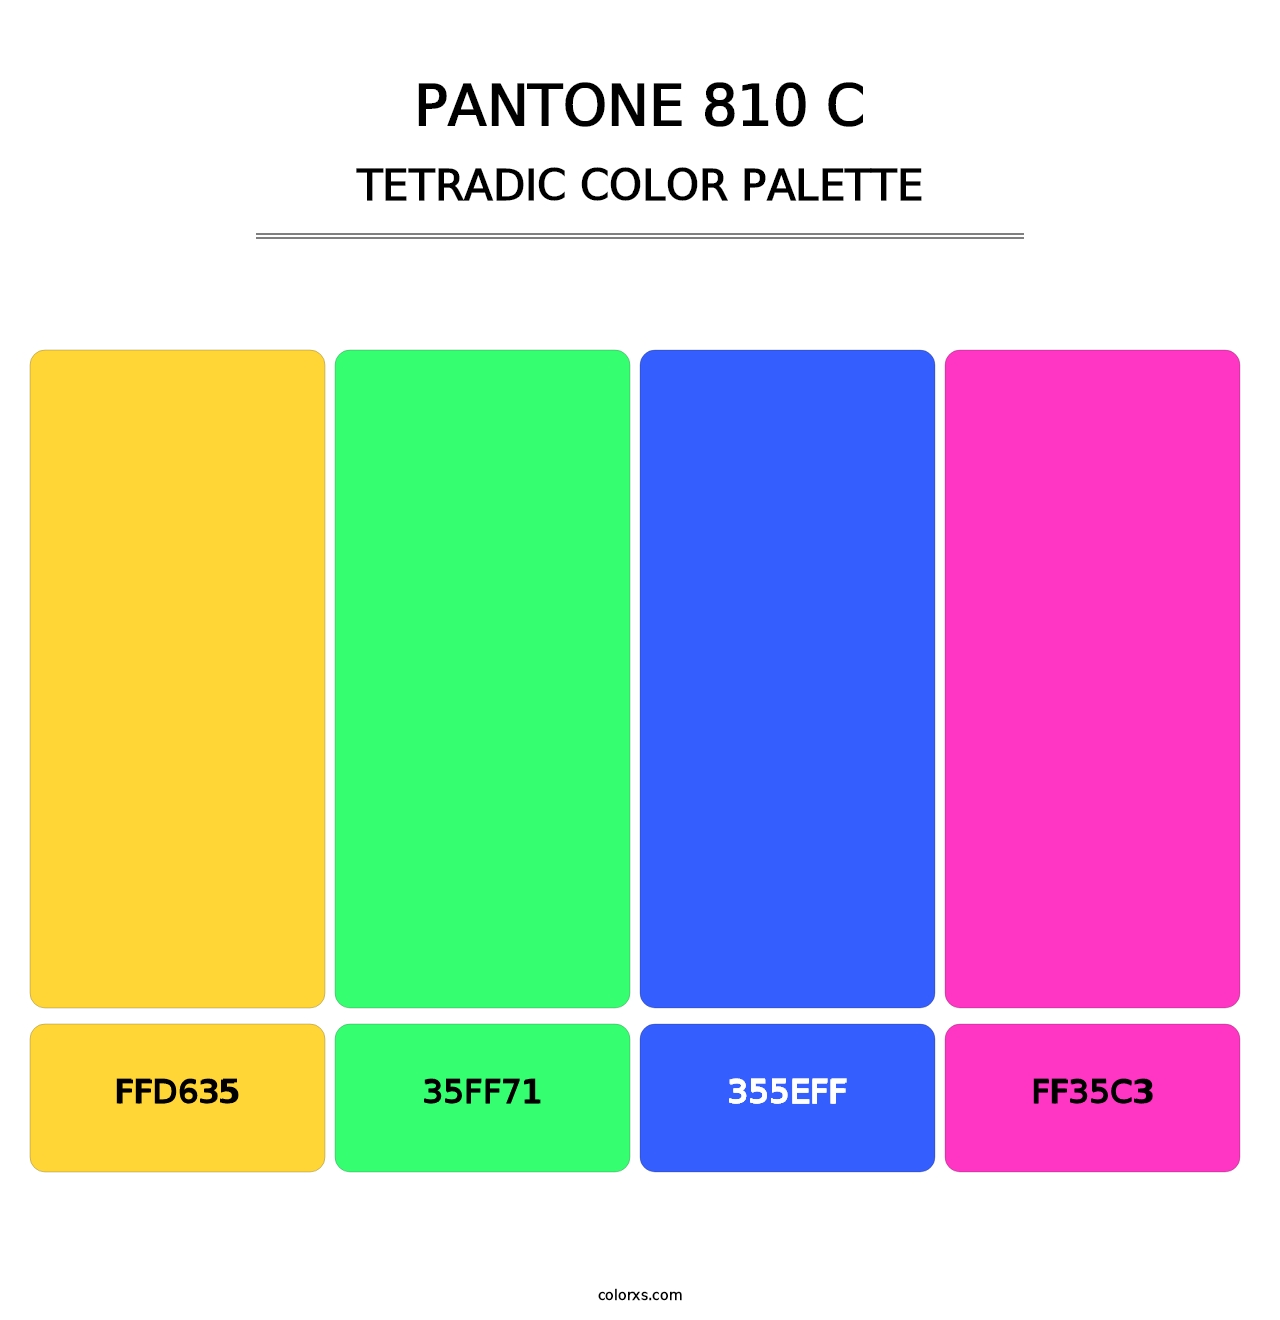 PANTONE 810 C - Tetradic Color Palette